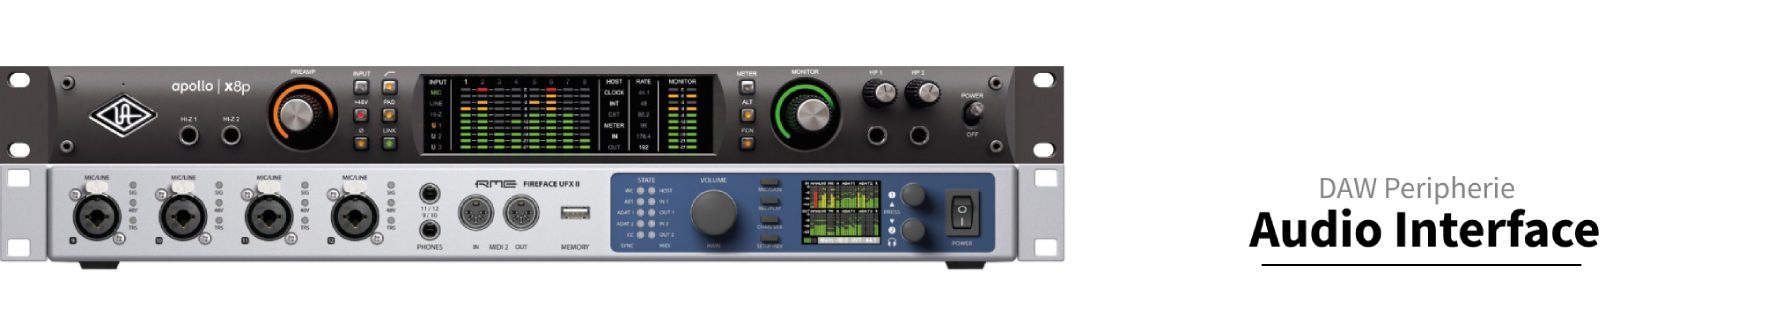 Audio Interface-4 DI-1 Port